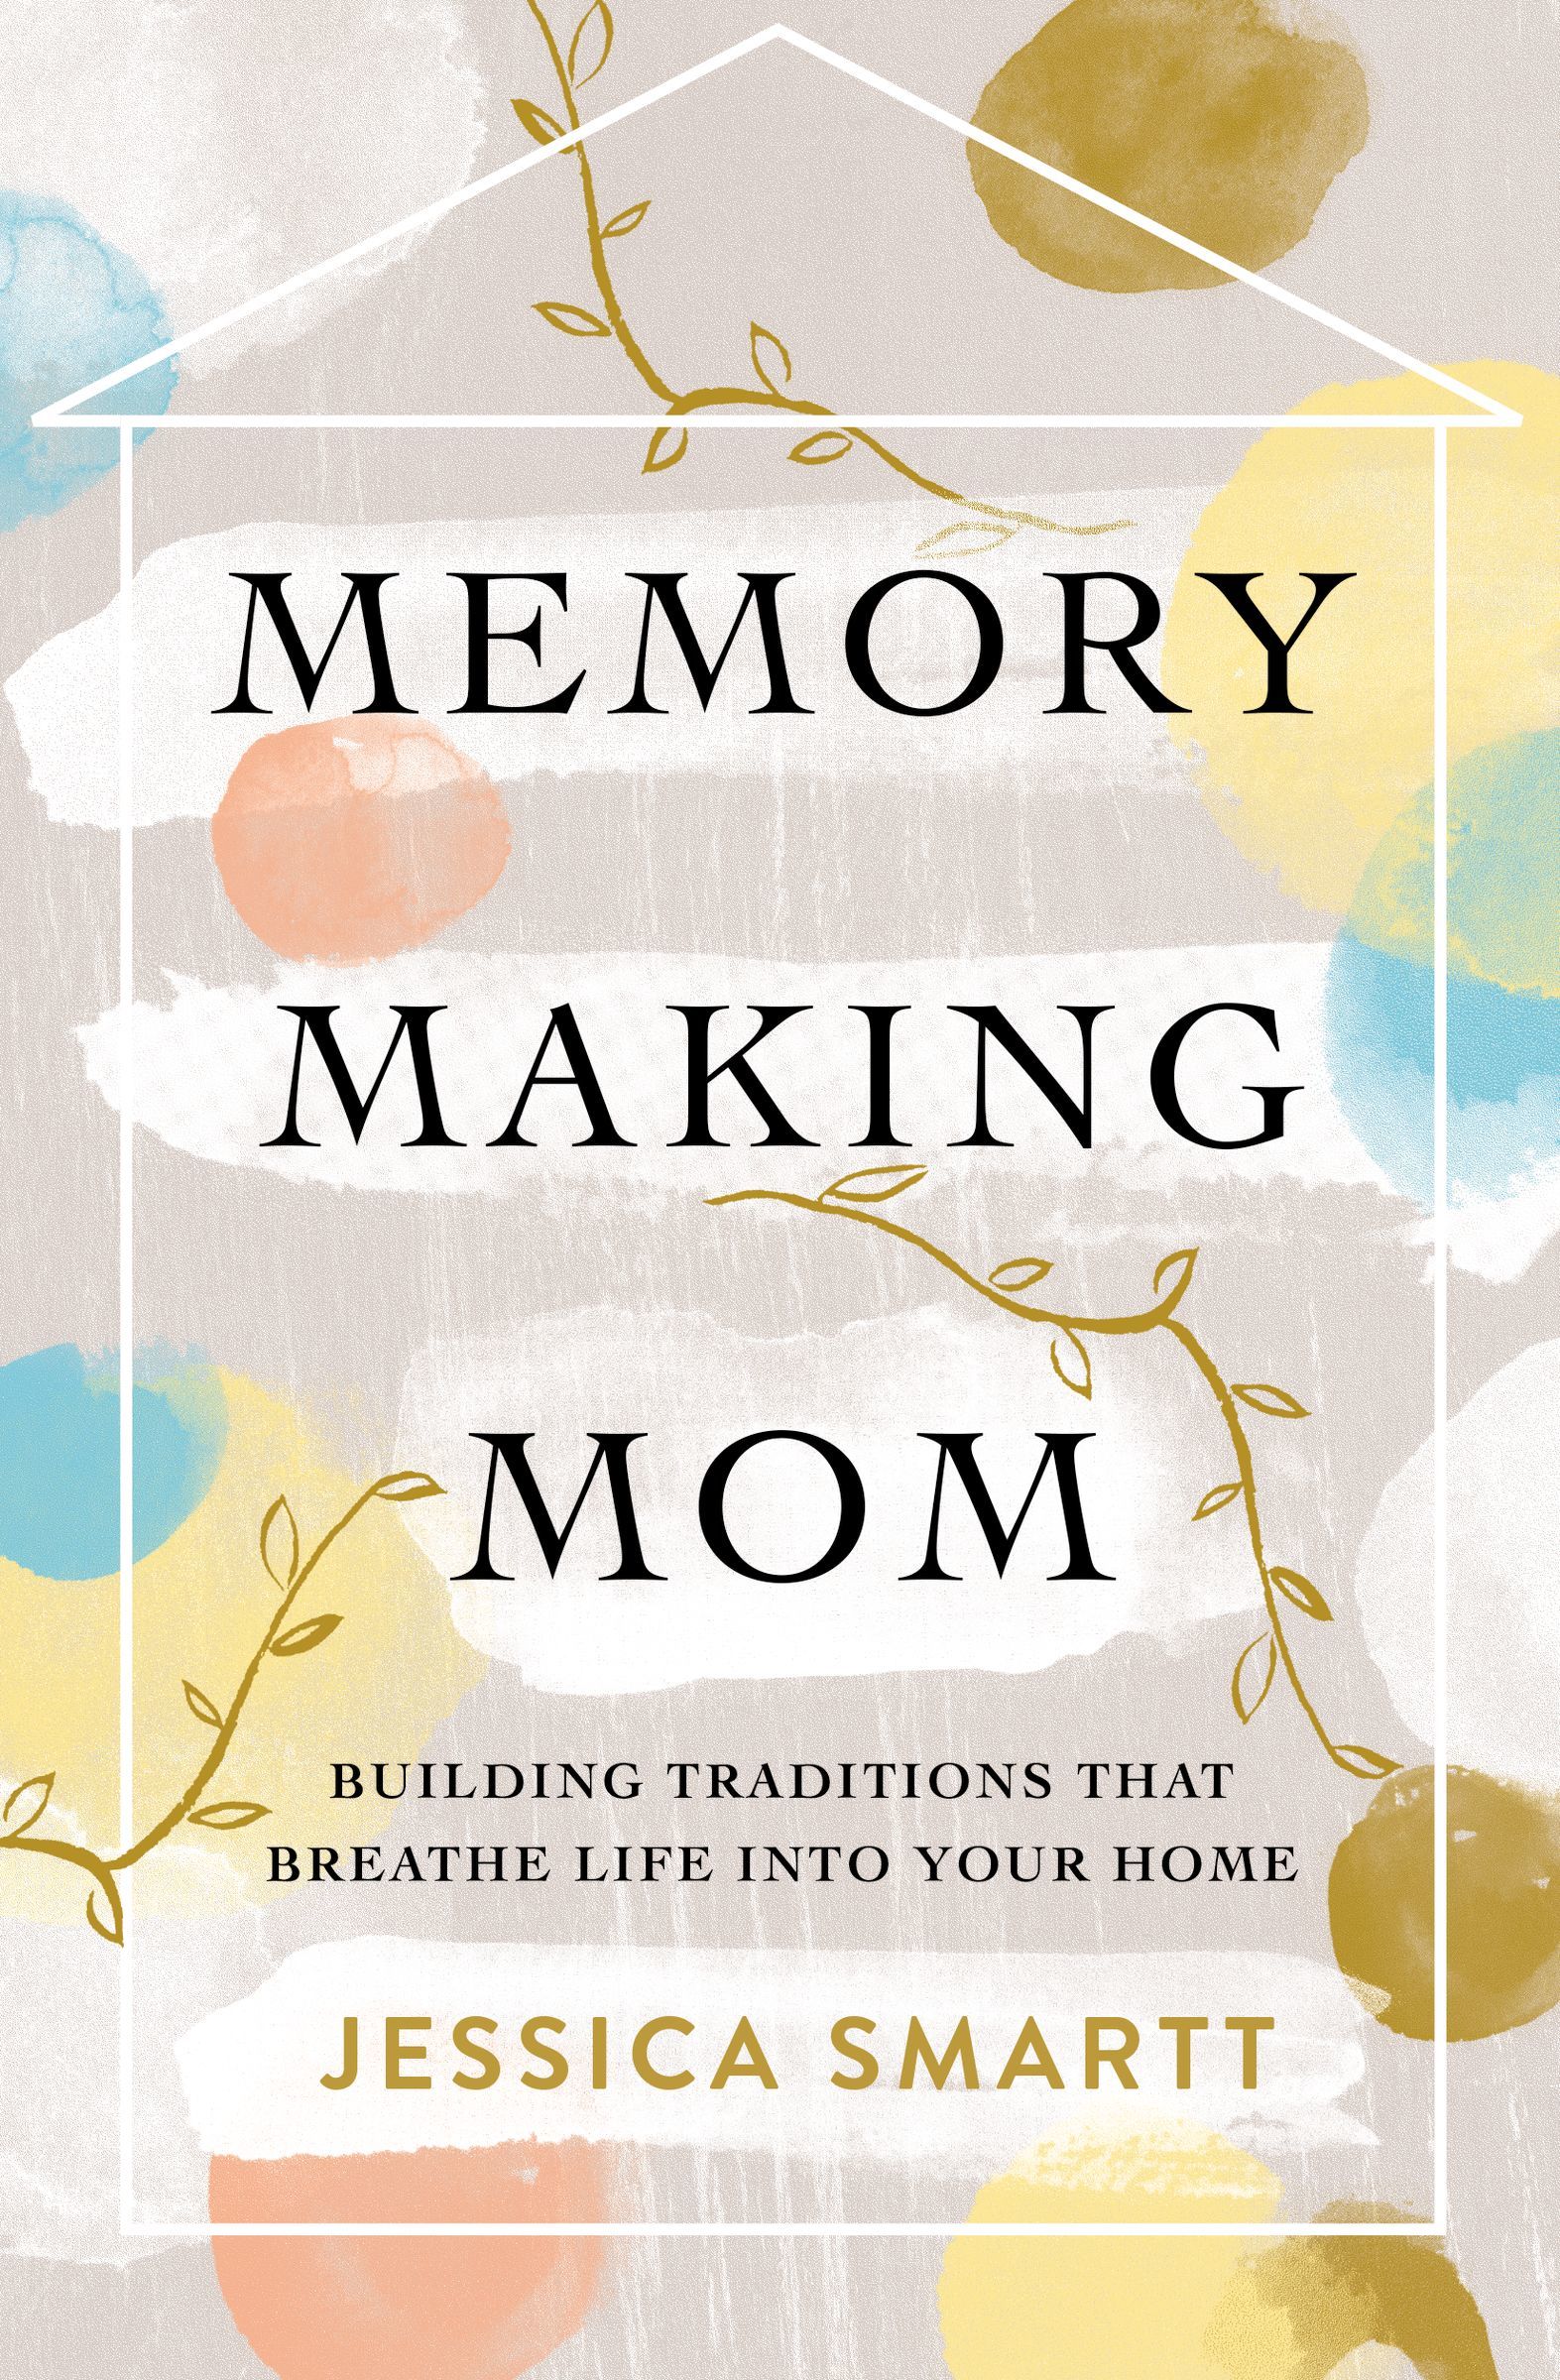 memory making mom cover